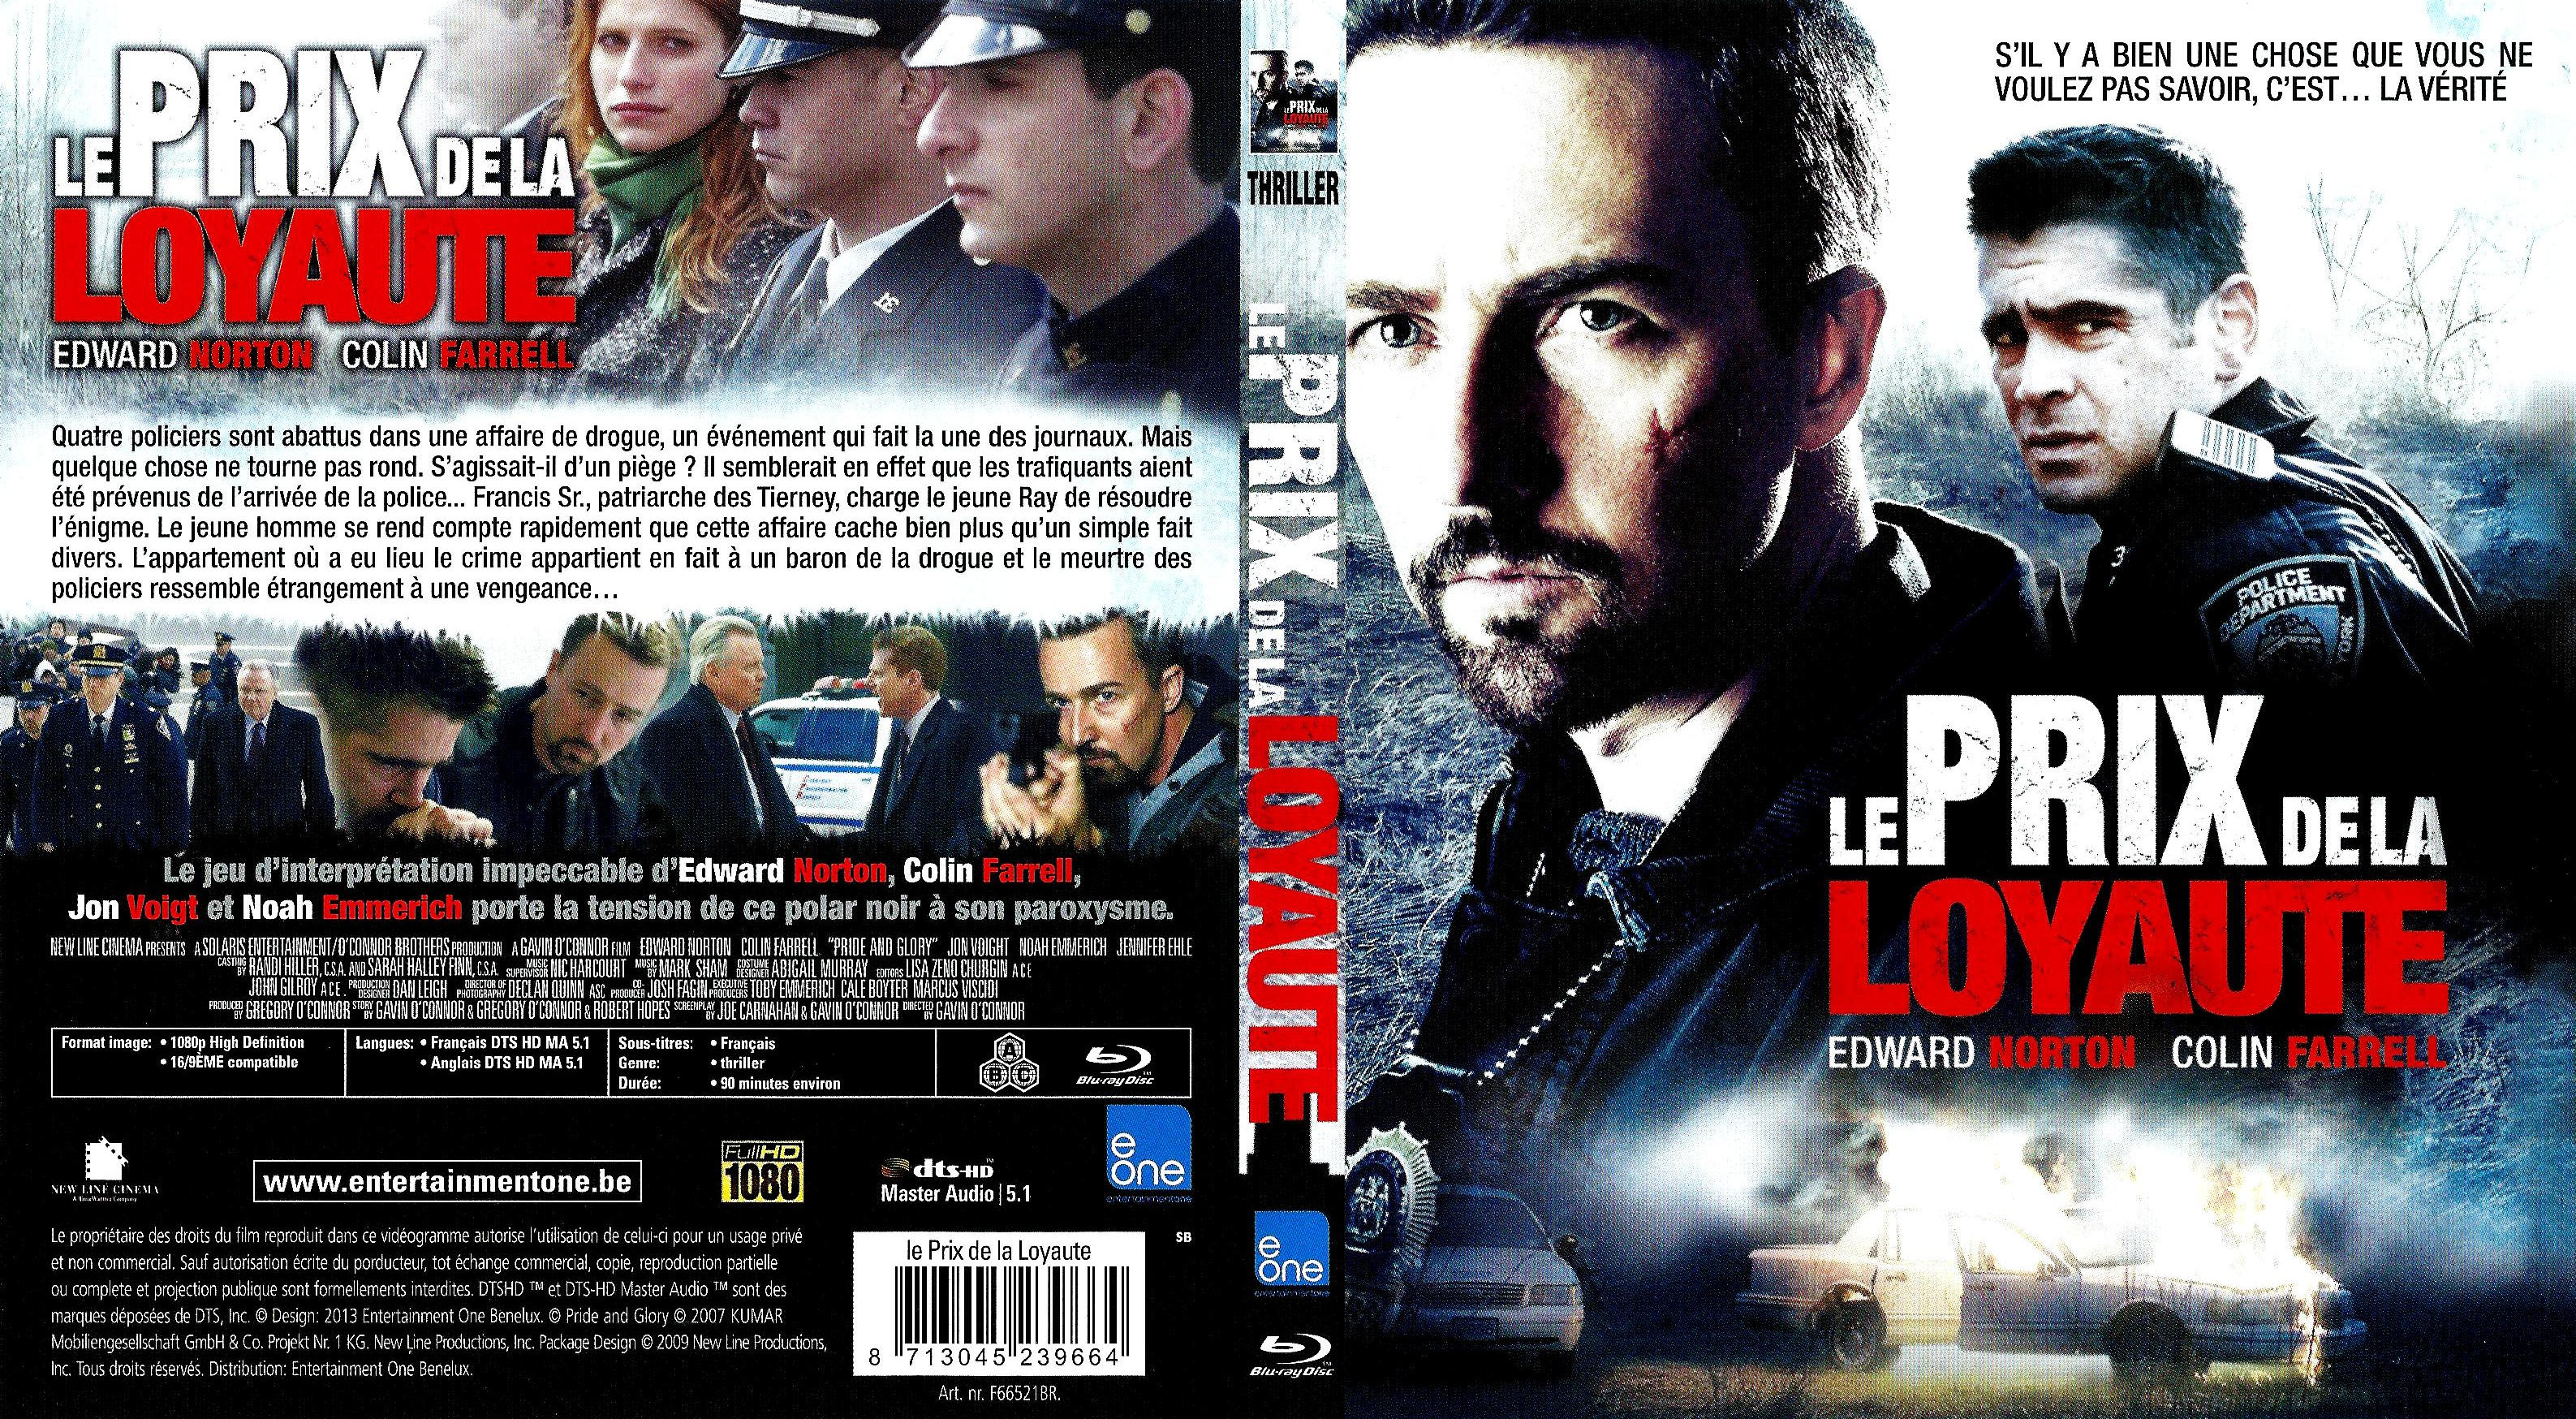 Jaquette DVD Le prix de la loyaut (BLU-RAY) v2